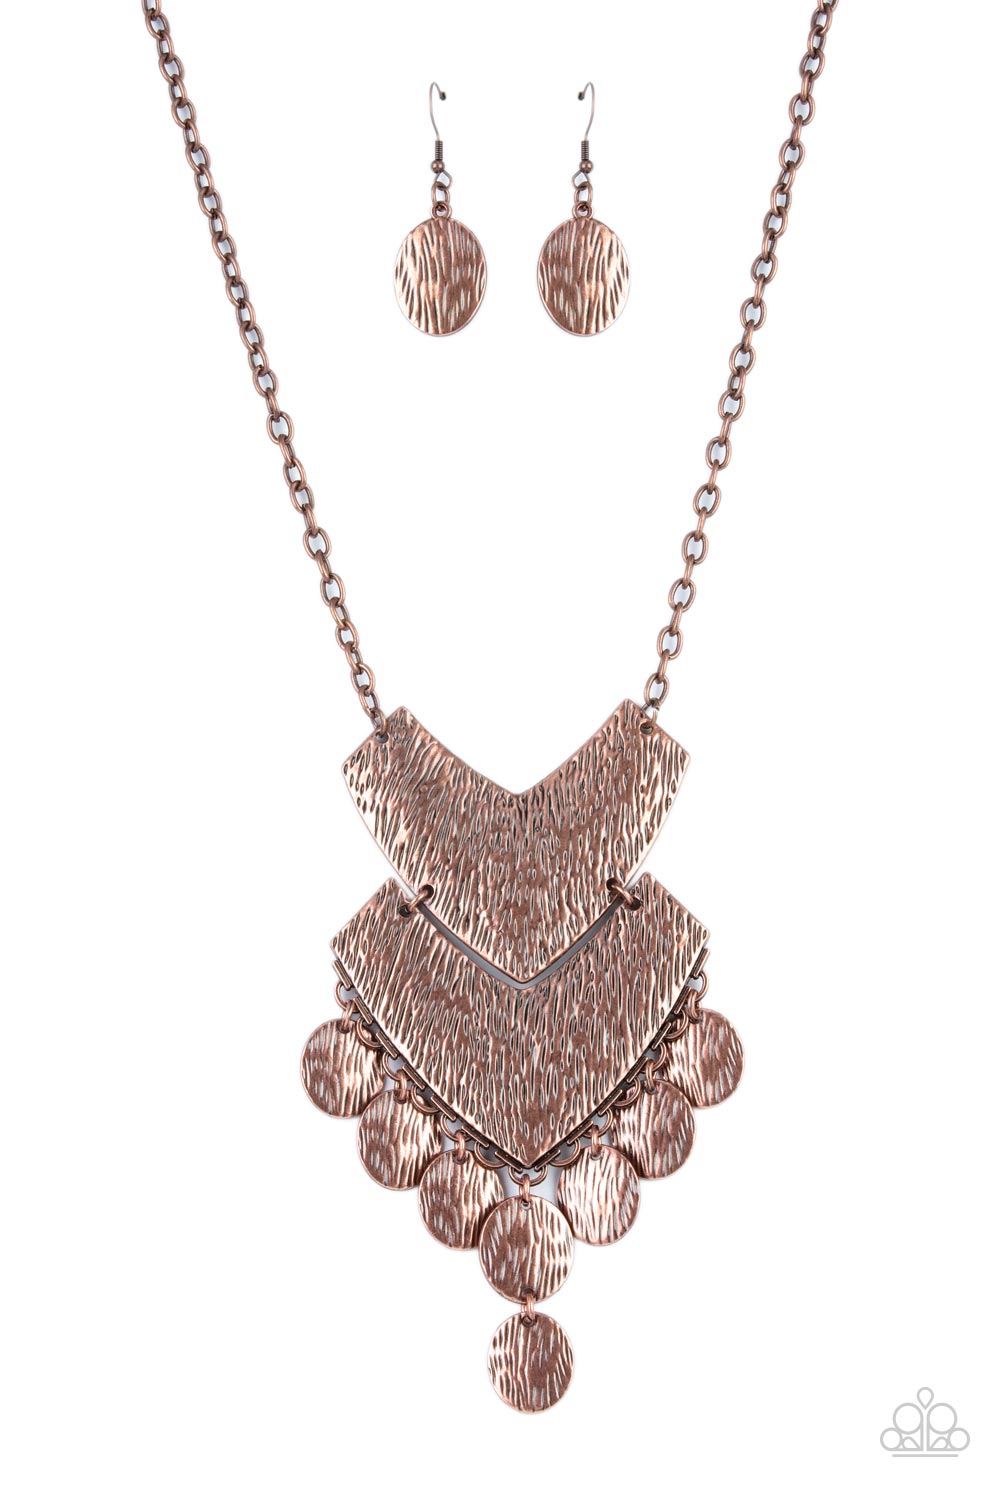 Keys to the ANIMAL Kingdom - Copper Necklace Set - Princess Glam Shop